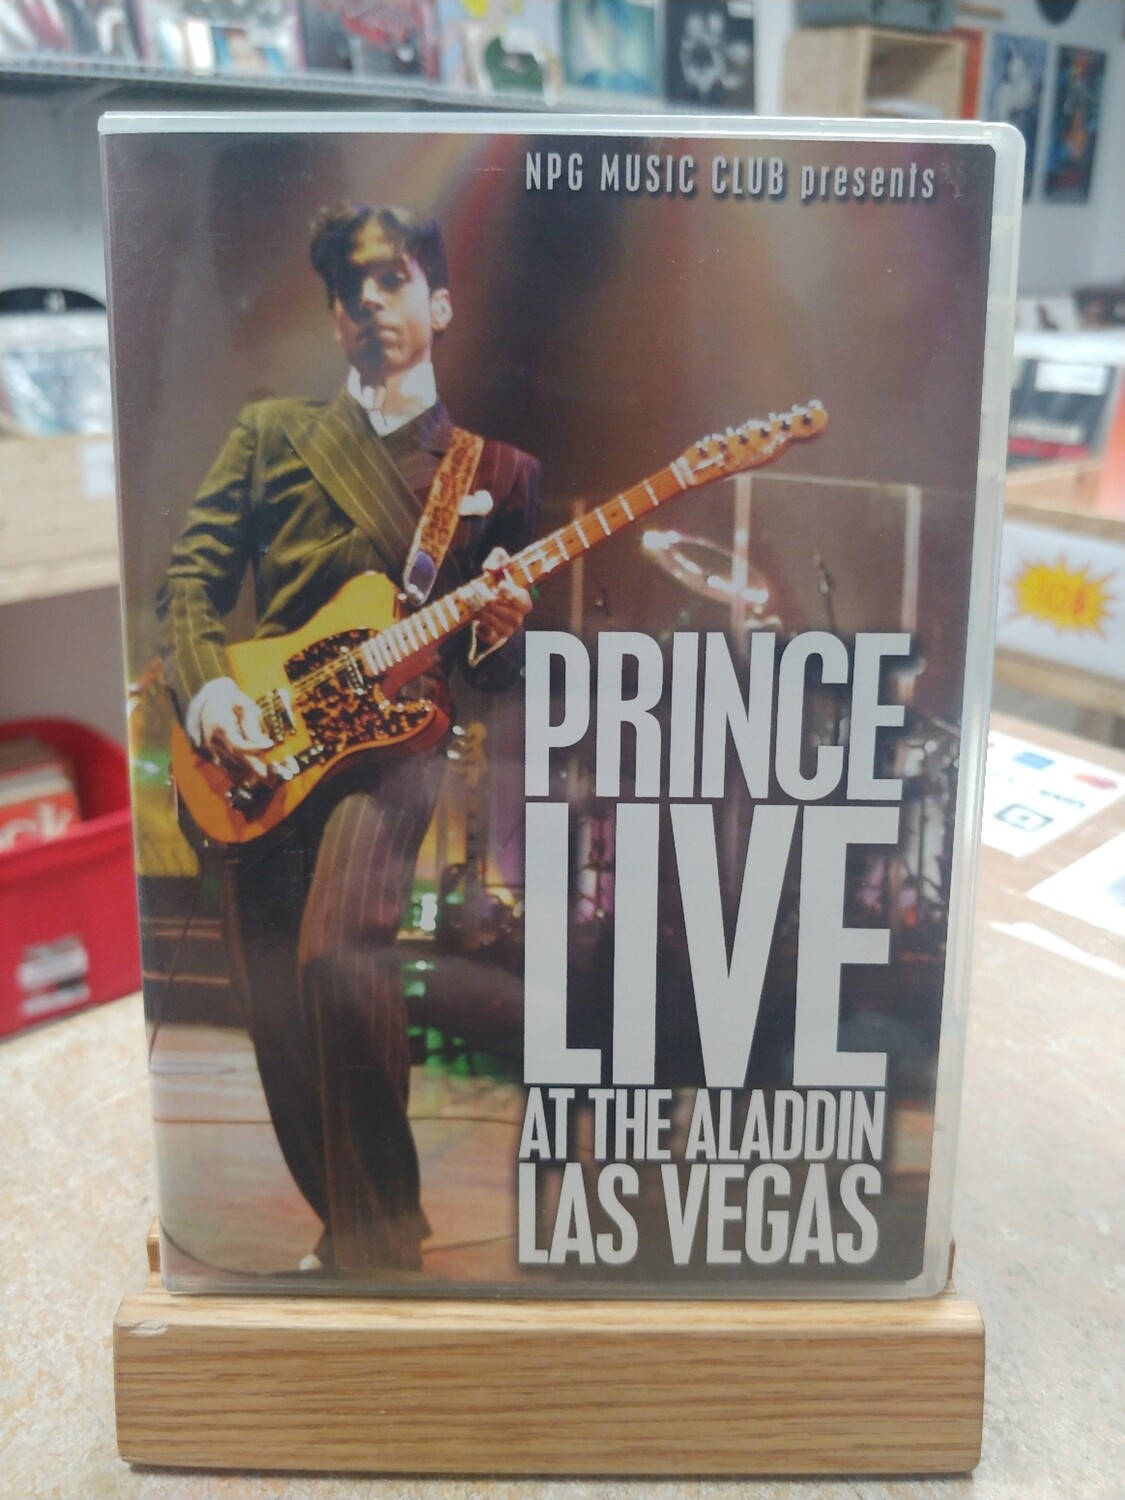 Prince - Prince Live at The Aladdin, Las Vegas (DVD)